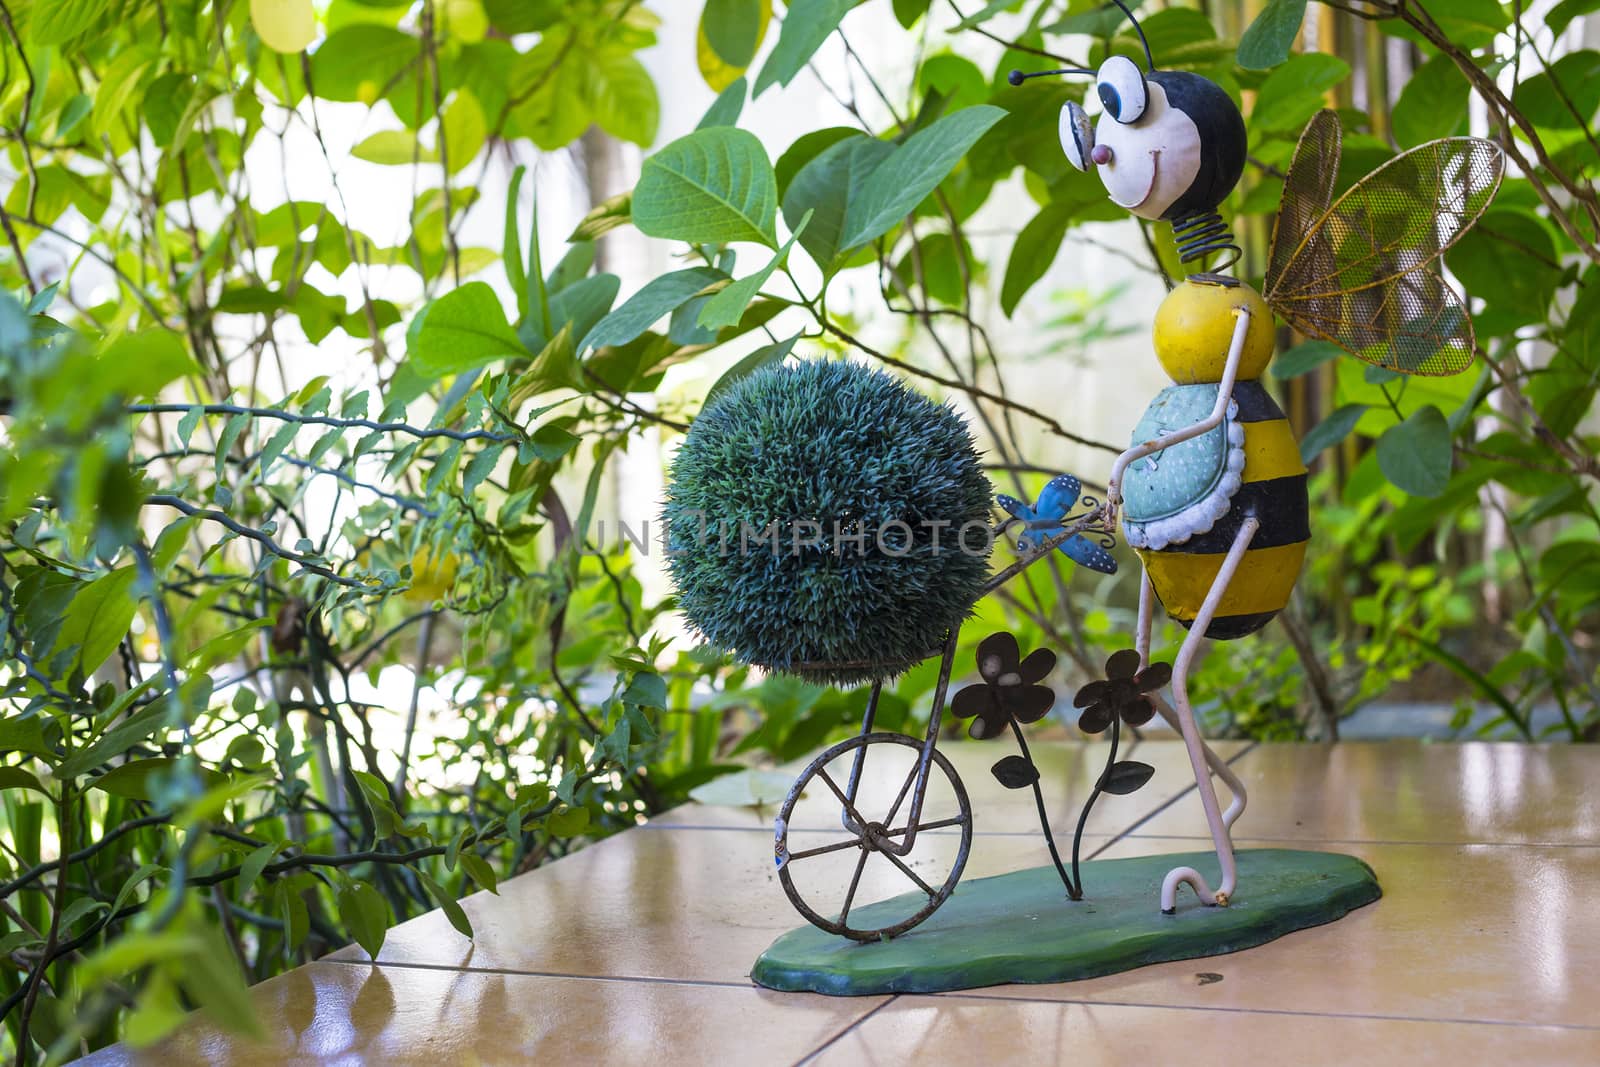 Decoration in green garden by truphoto